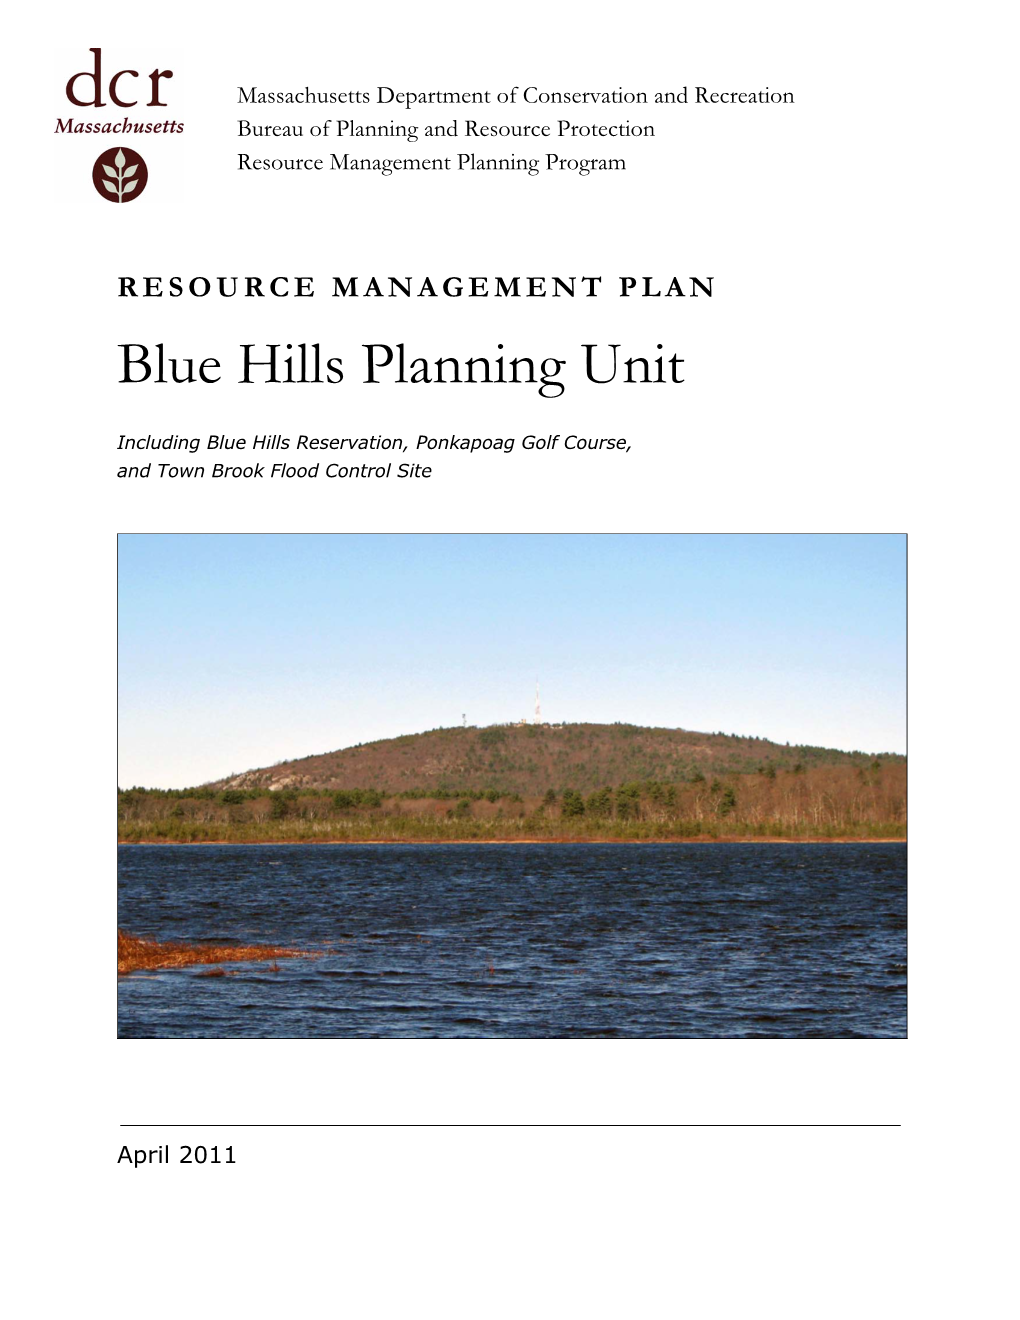 Blue Hills Planning Unit